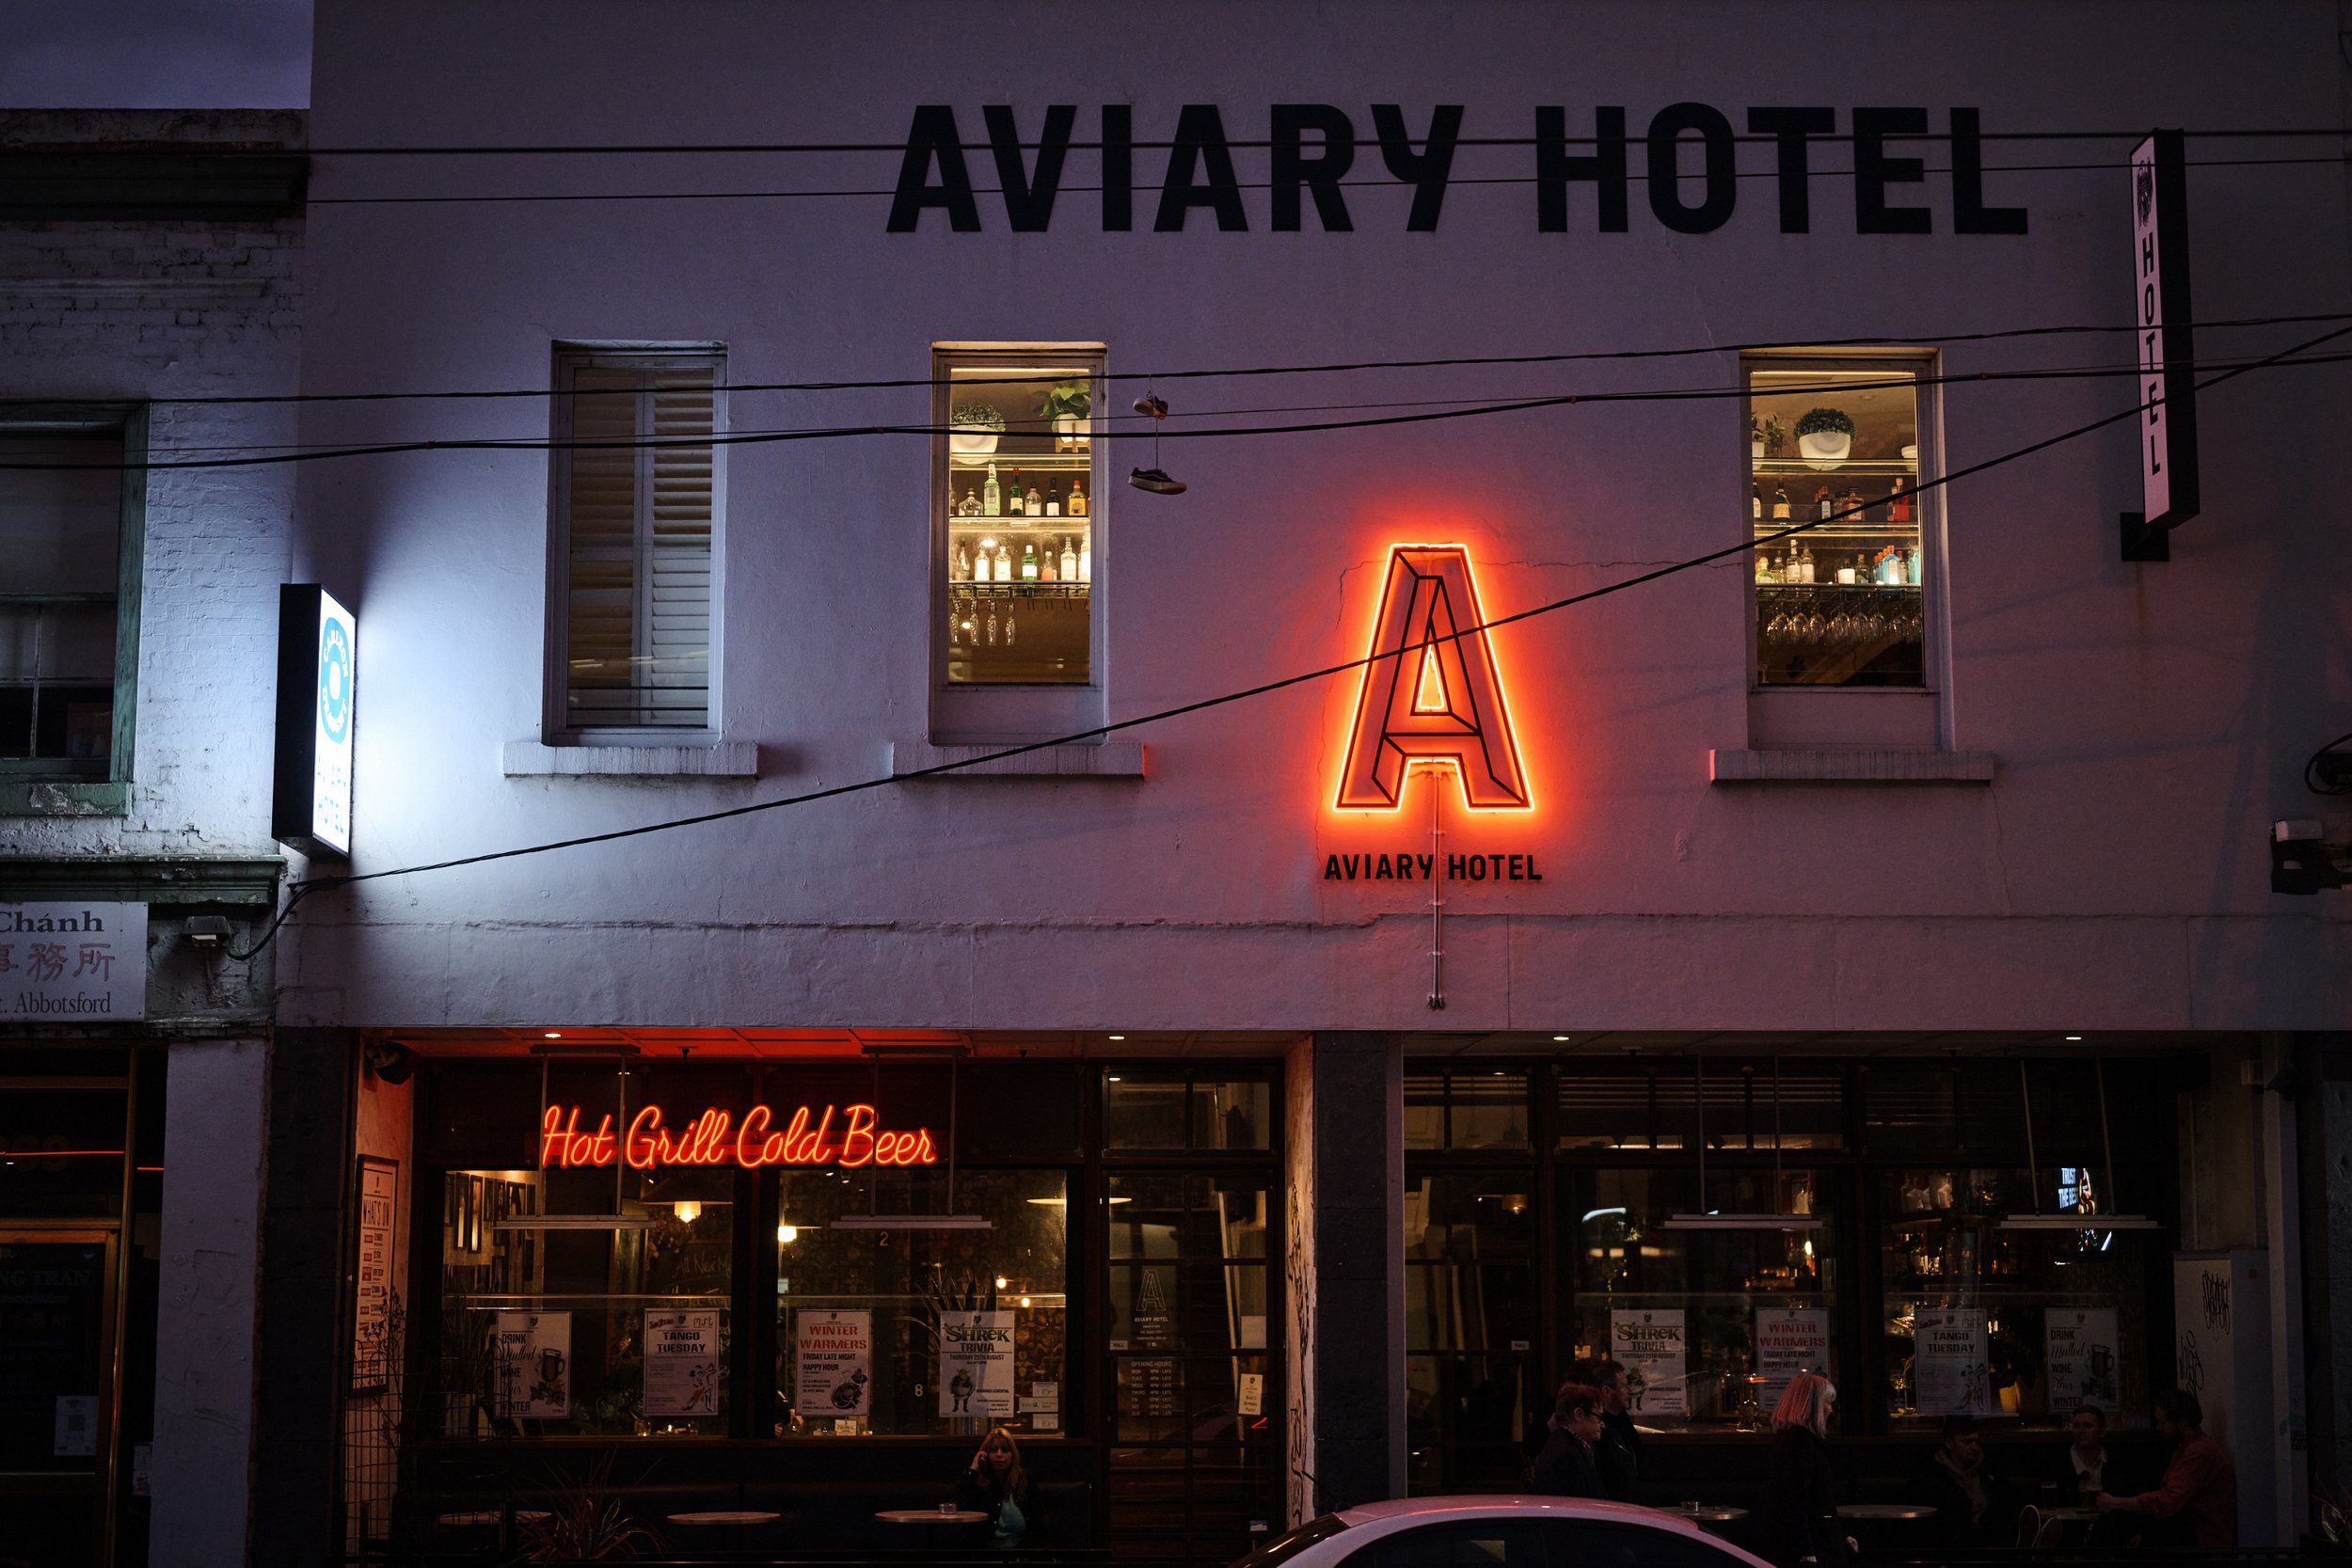 Aviary Hotel - Serv Agency - Longboy Media 4 (4).jpg